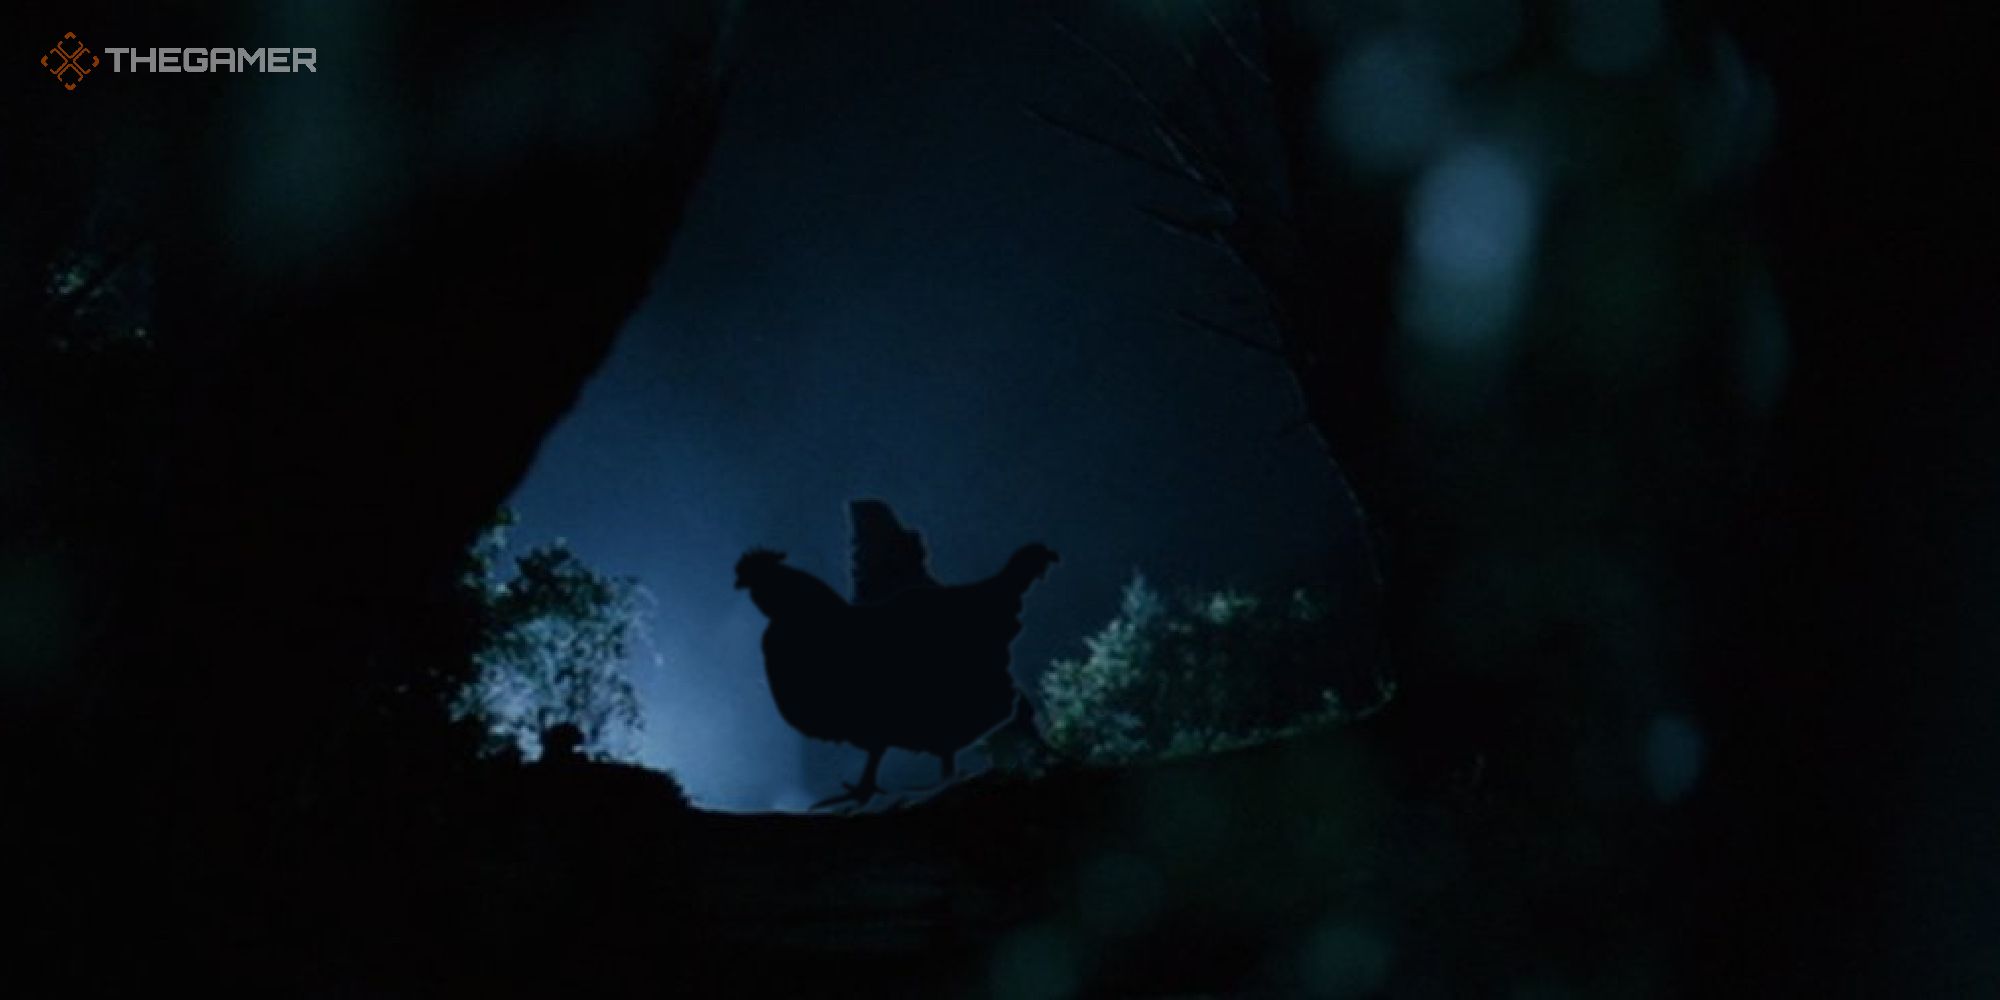 Ringwraith riding a chicken through a forest